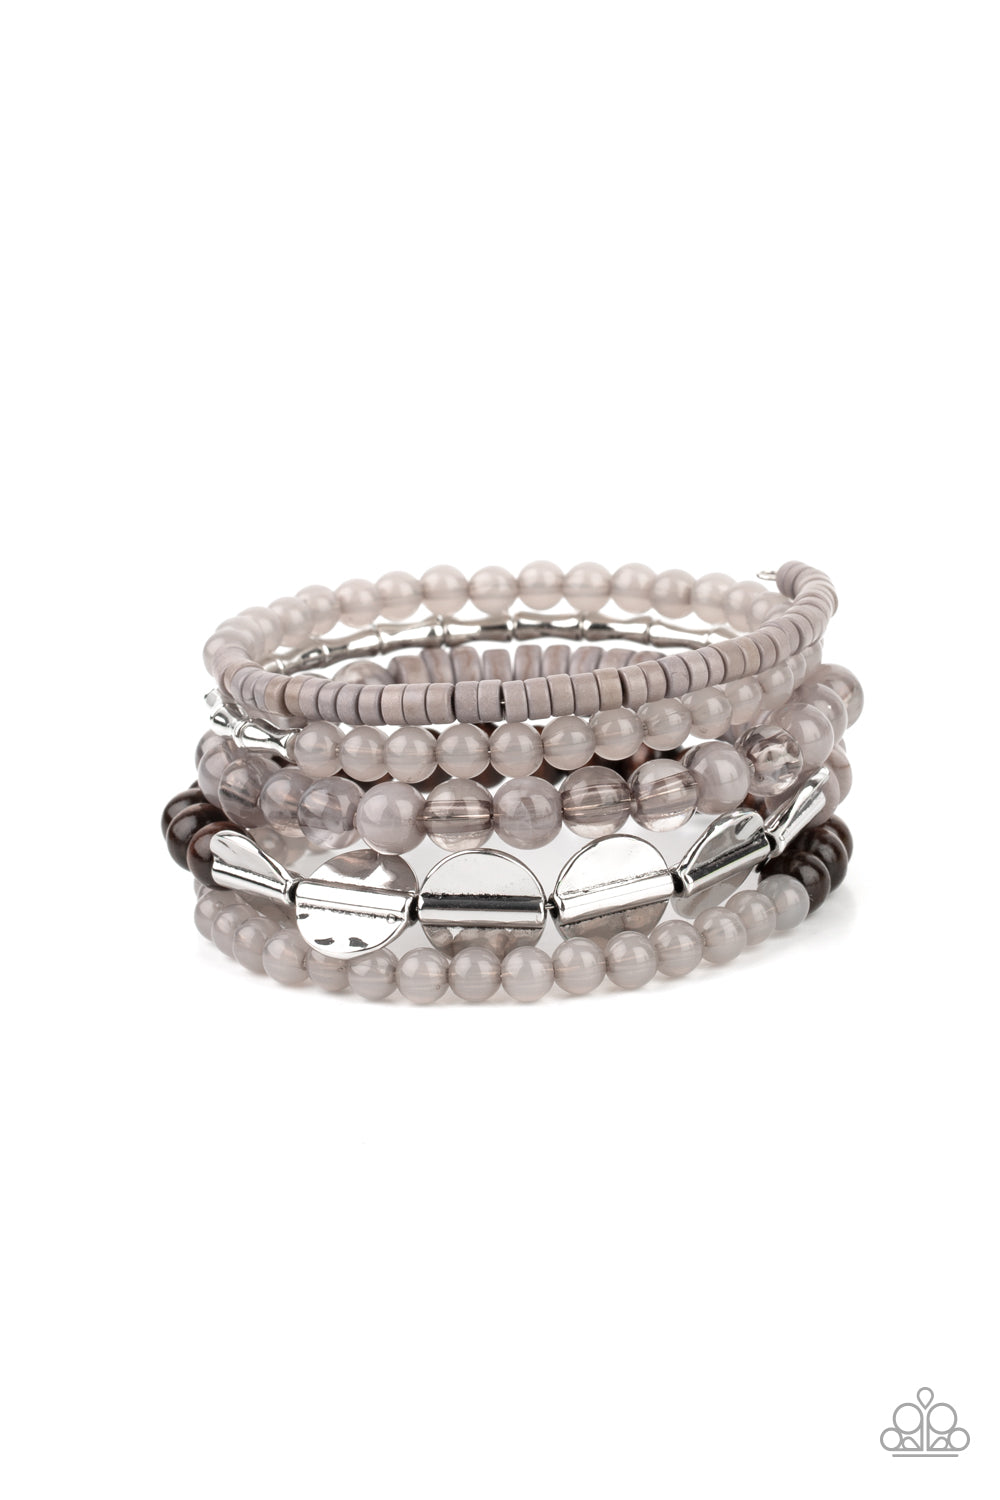 Free-Spirited Spiral Bracelet (Silver, White)